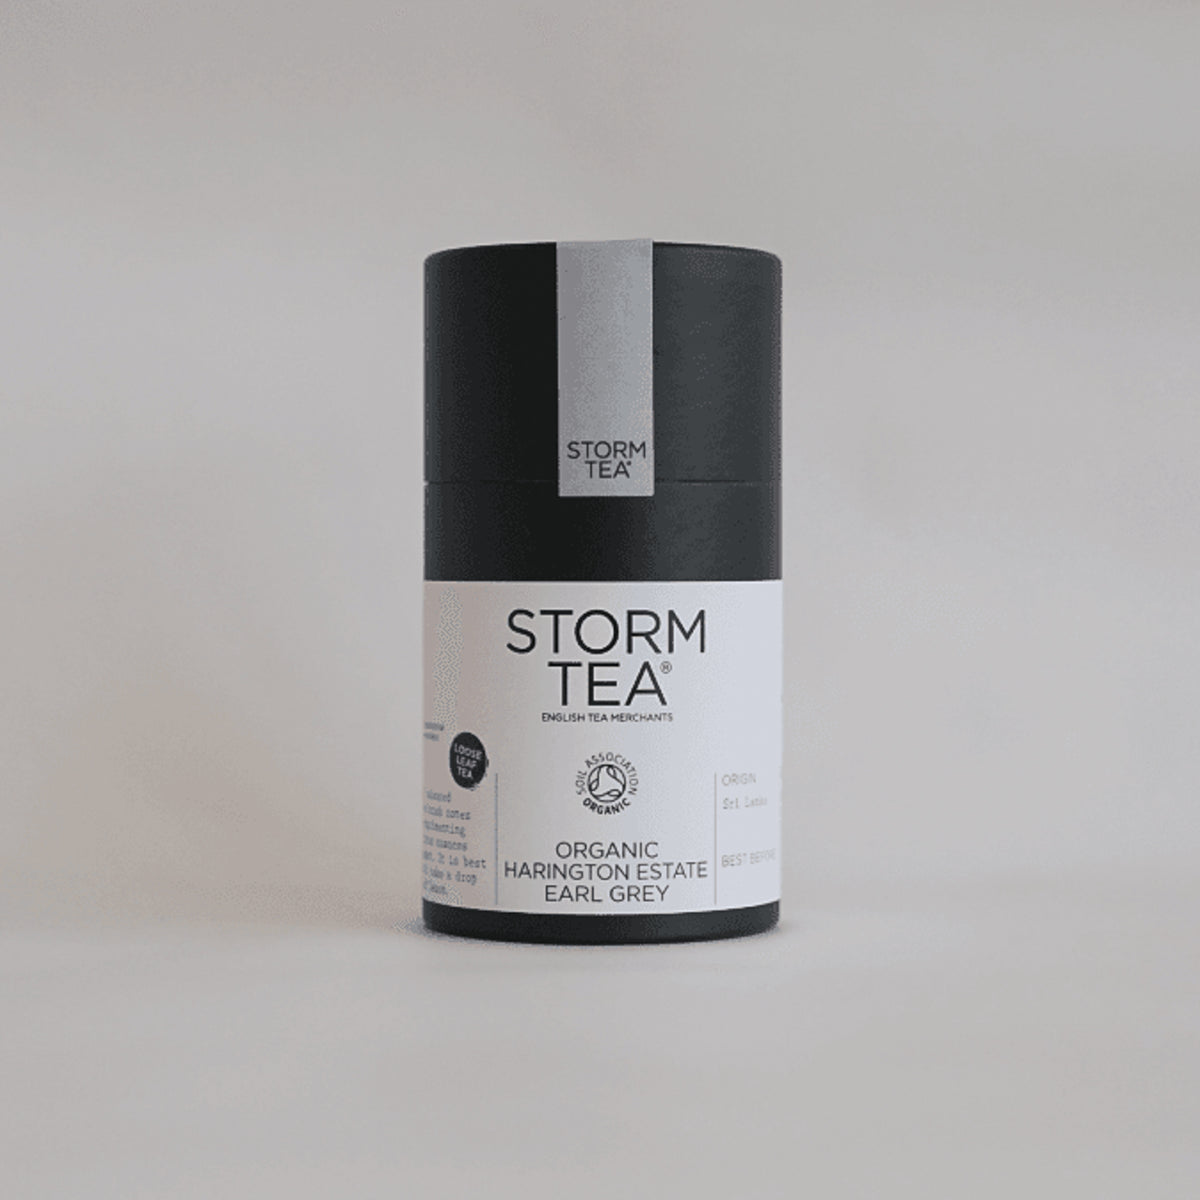 Storm Tea - Handcrafted Organic Earl Grey Tea, Harrington Estate